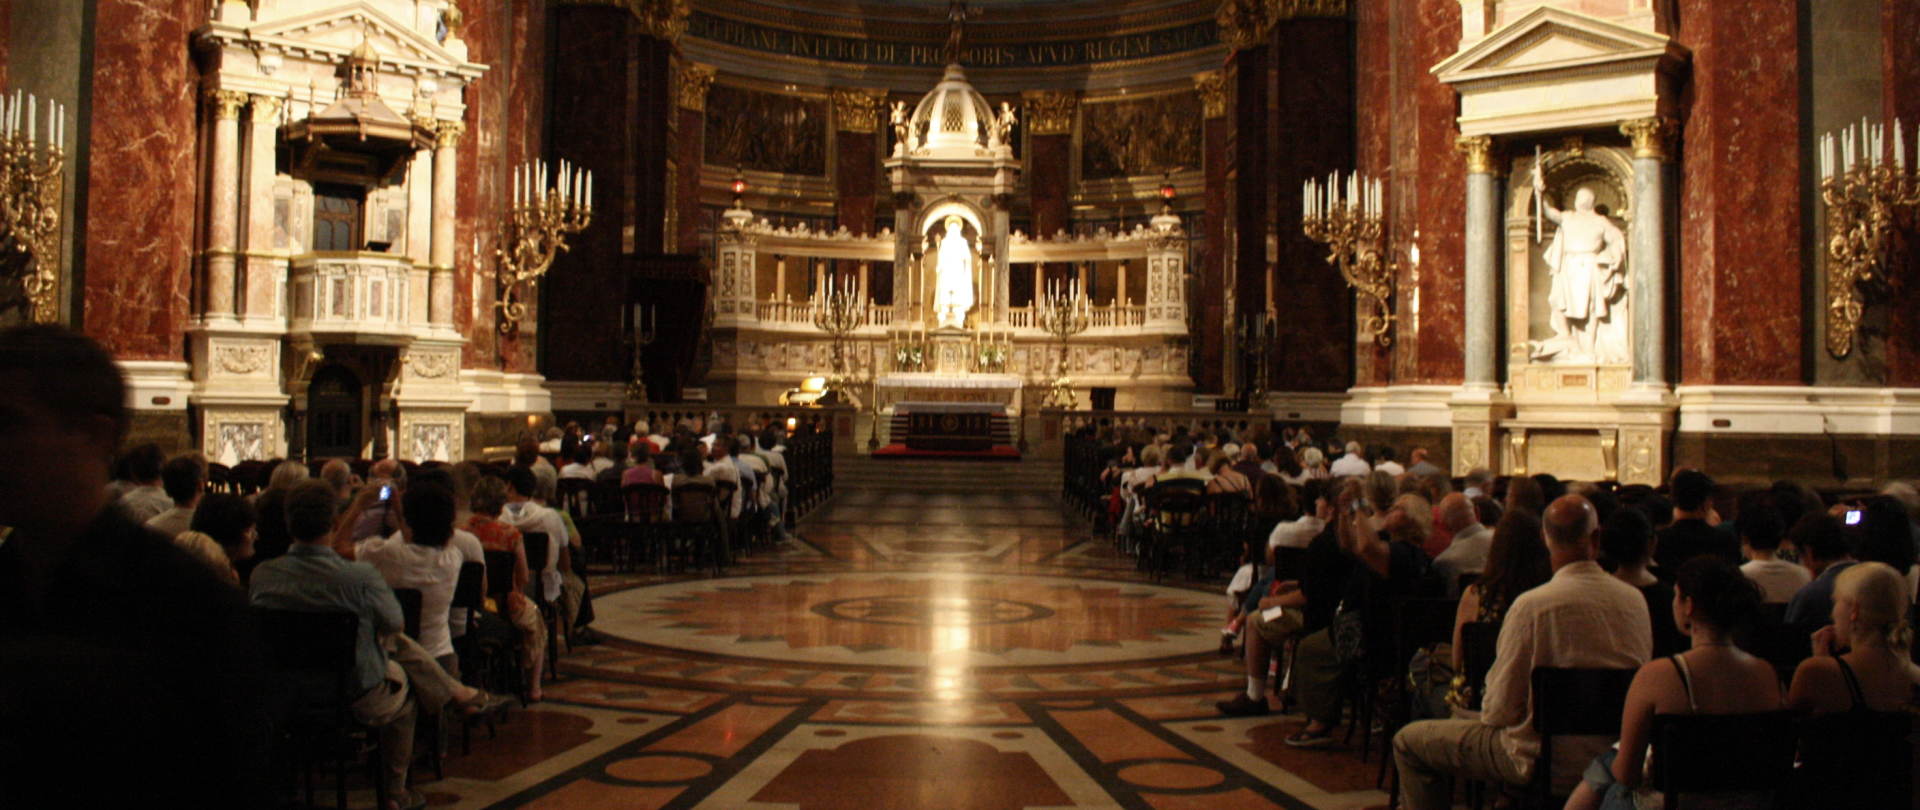 Organ concert at St. Stephen's Basilica